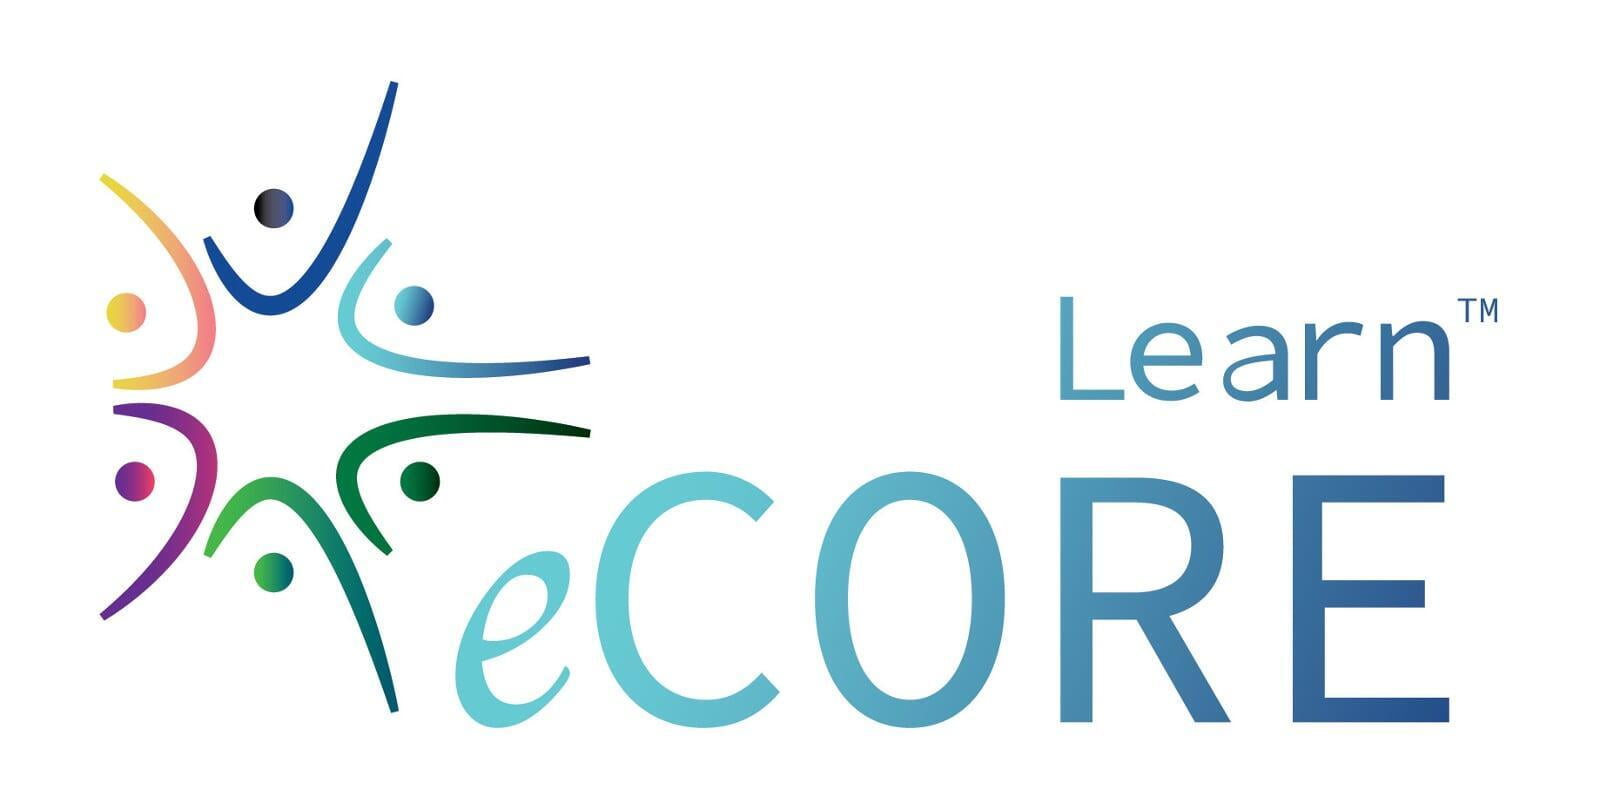 Learn eCORE and EdTek offer HSRT & ICOI Training eCourses